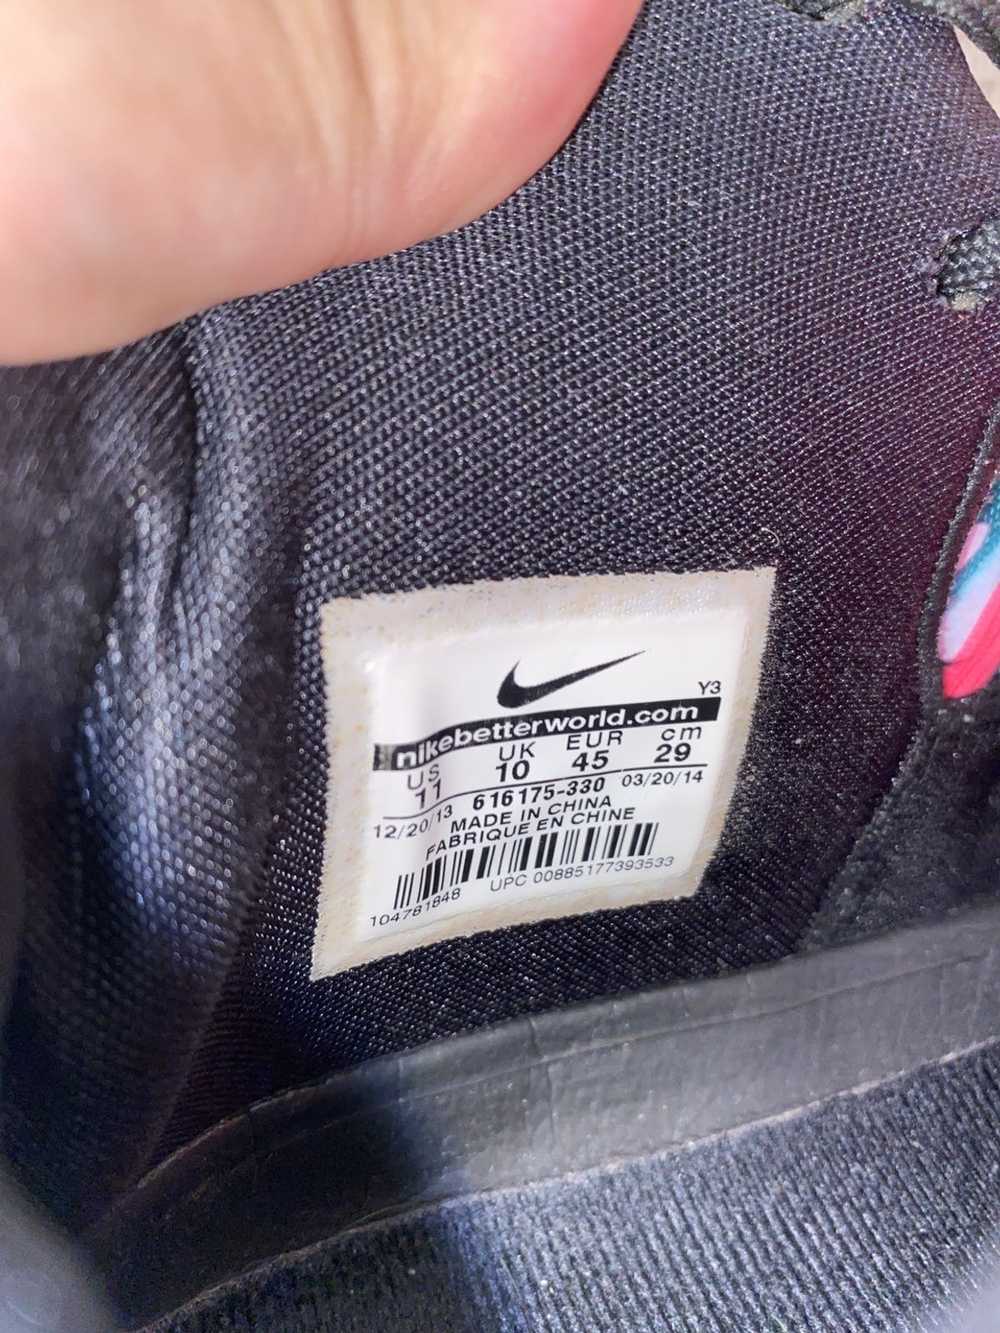 Nike Nike LeBron 11 - South Beach - Size 11 - image 6